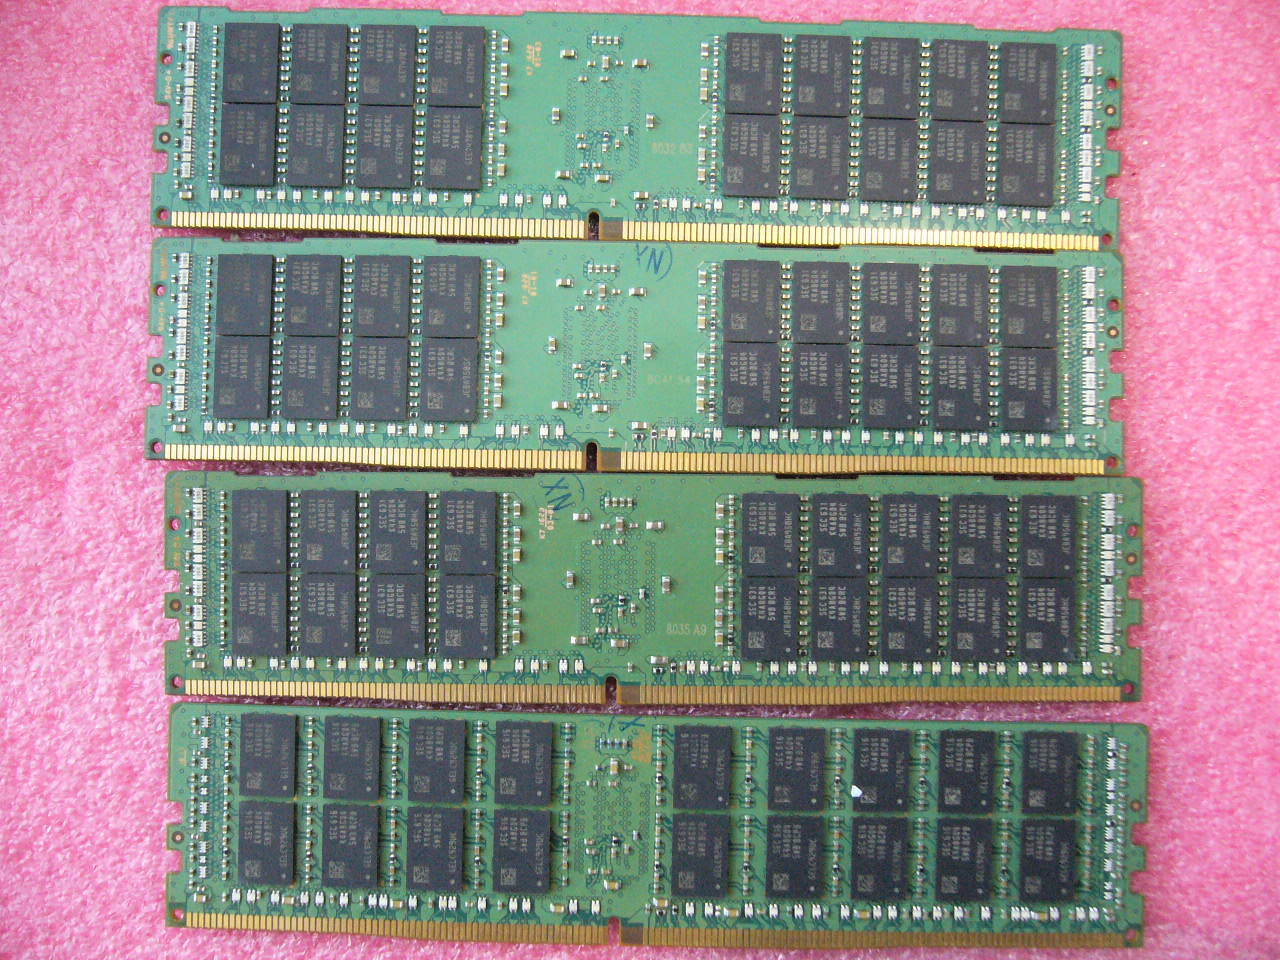 QTY 1x 32GB DDR4 2Rx4 PC4-2400T-RA1 ECC Registered memory Samsung M393A4K40BB1 - zum Schließen ins Bild klicken